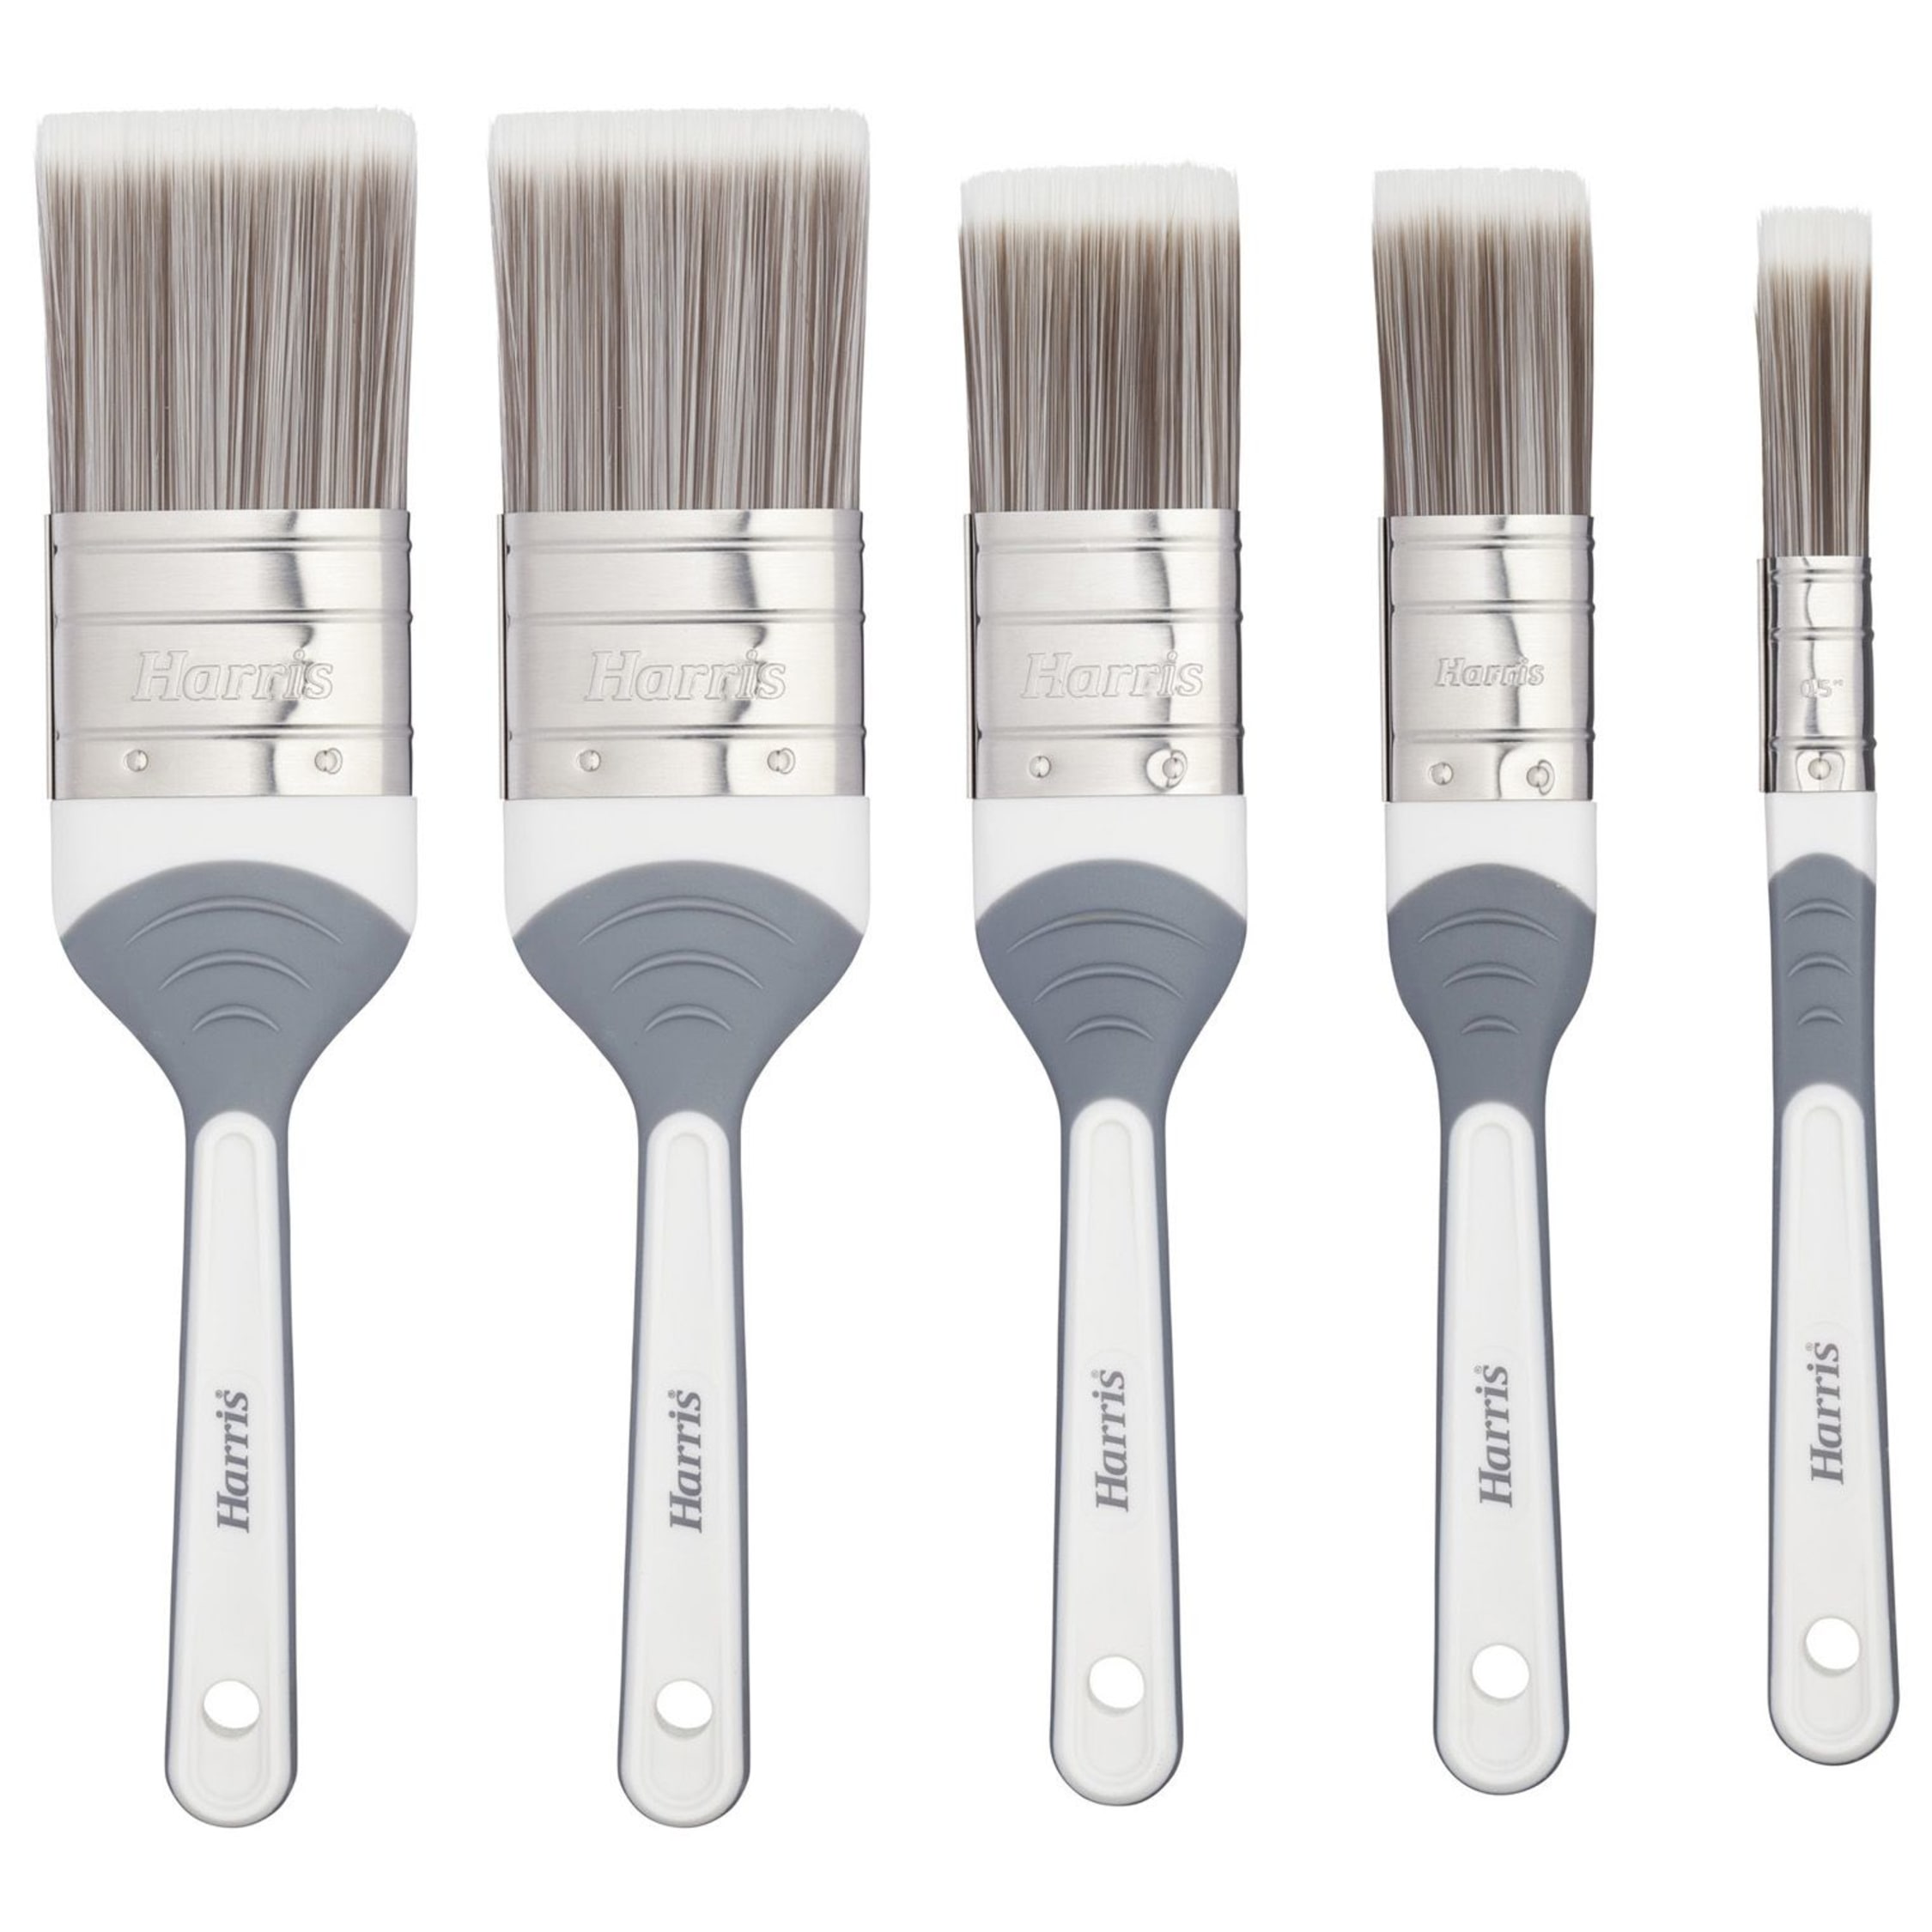 Packs Available Harris No Bristle Loss Evolution Paint Brush 0.5" 1" 1.5" 2" 